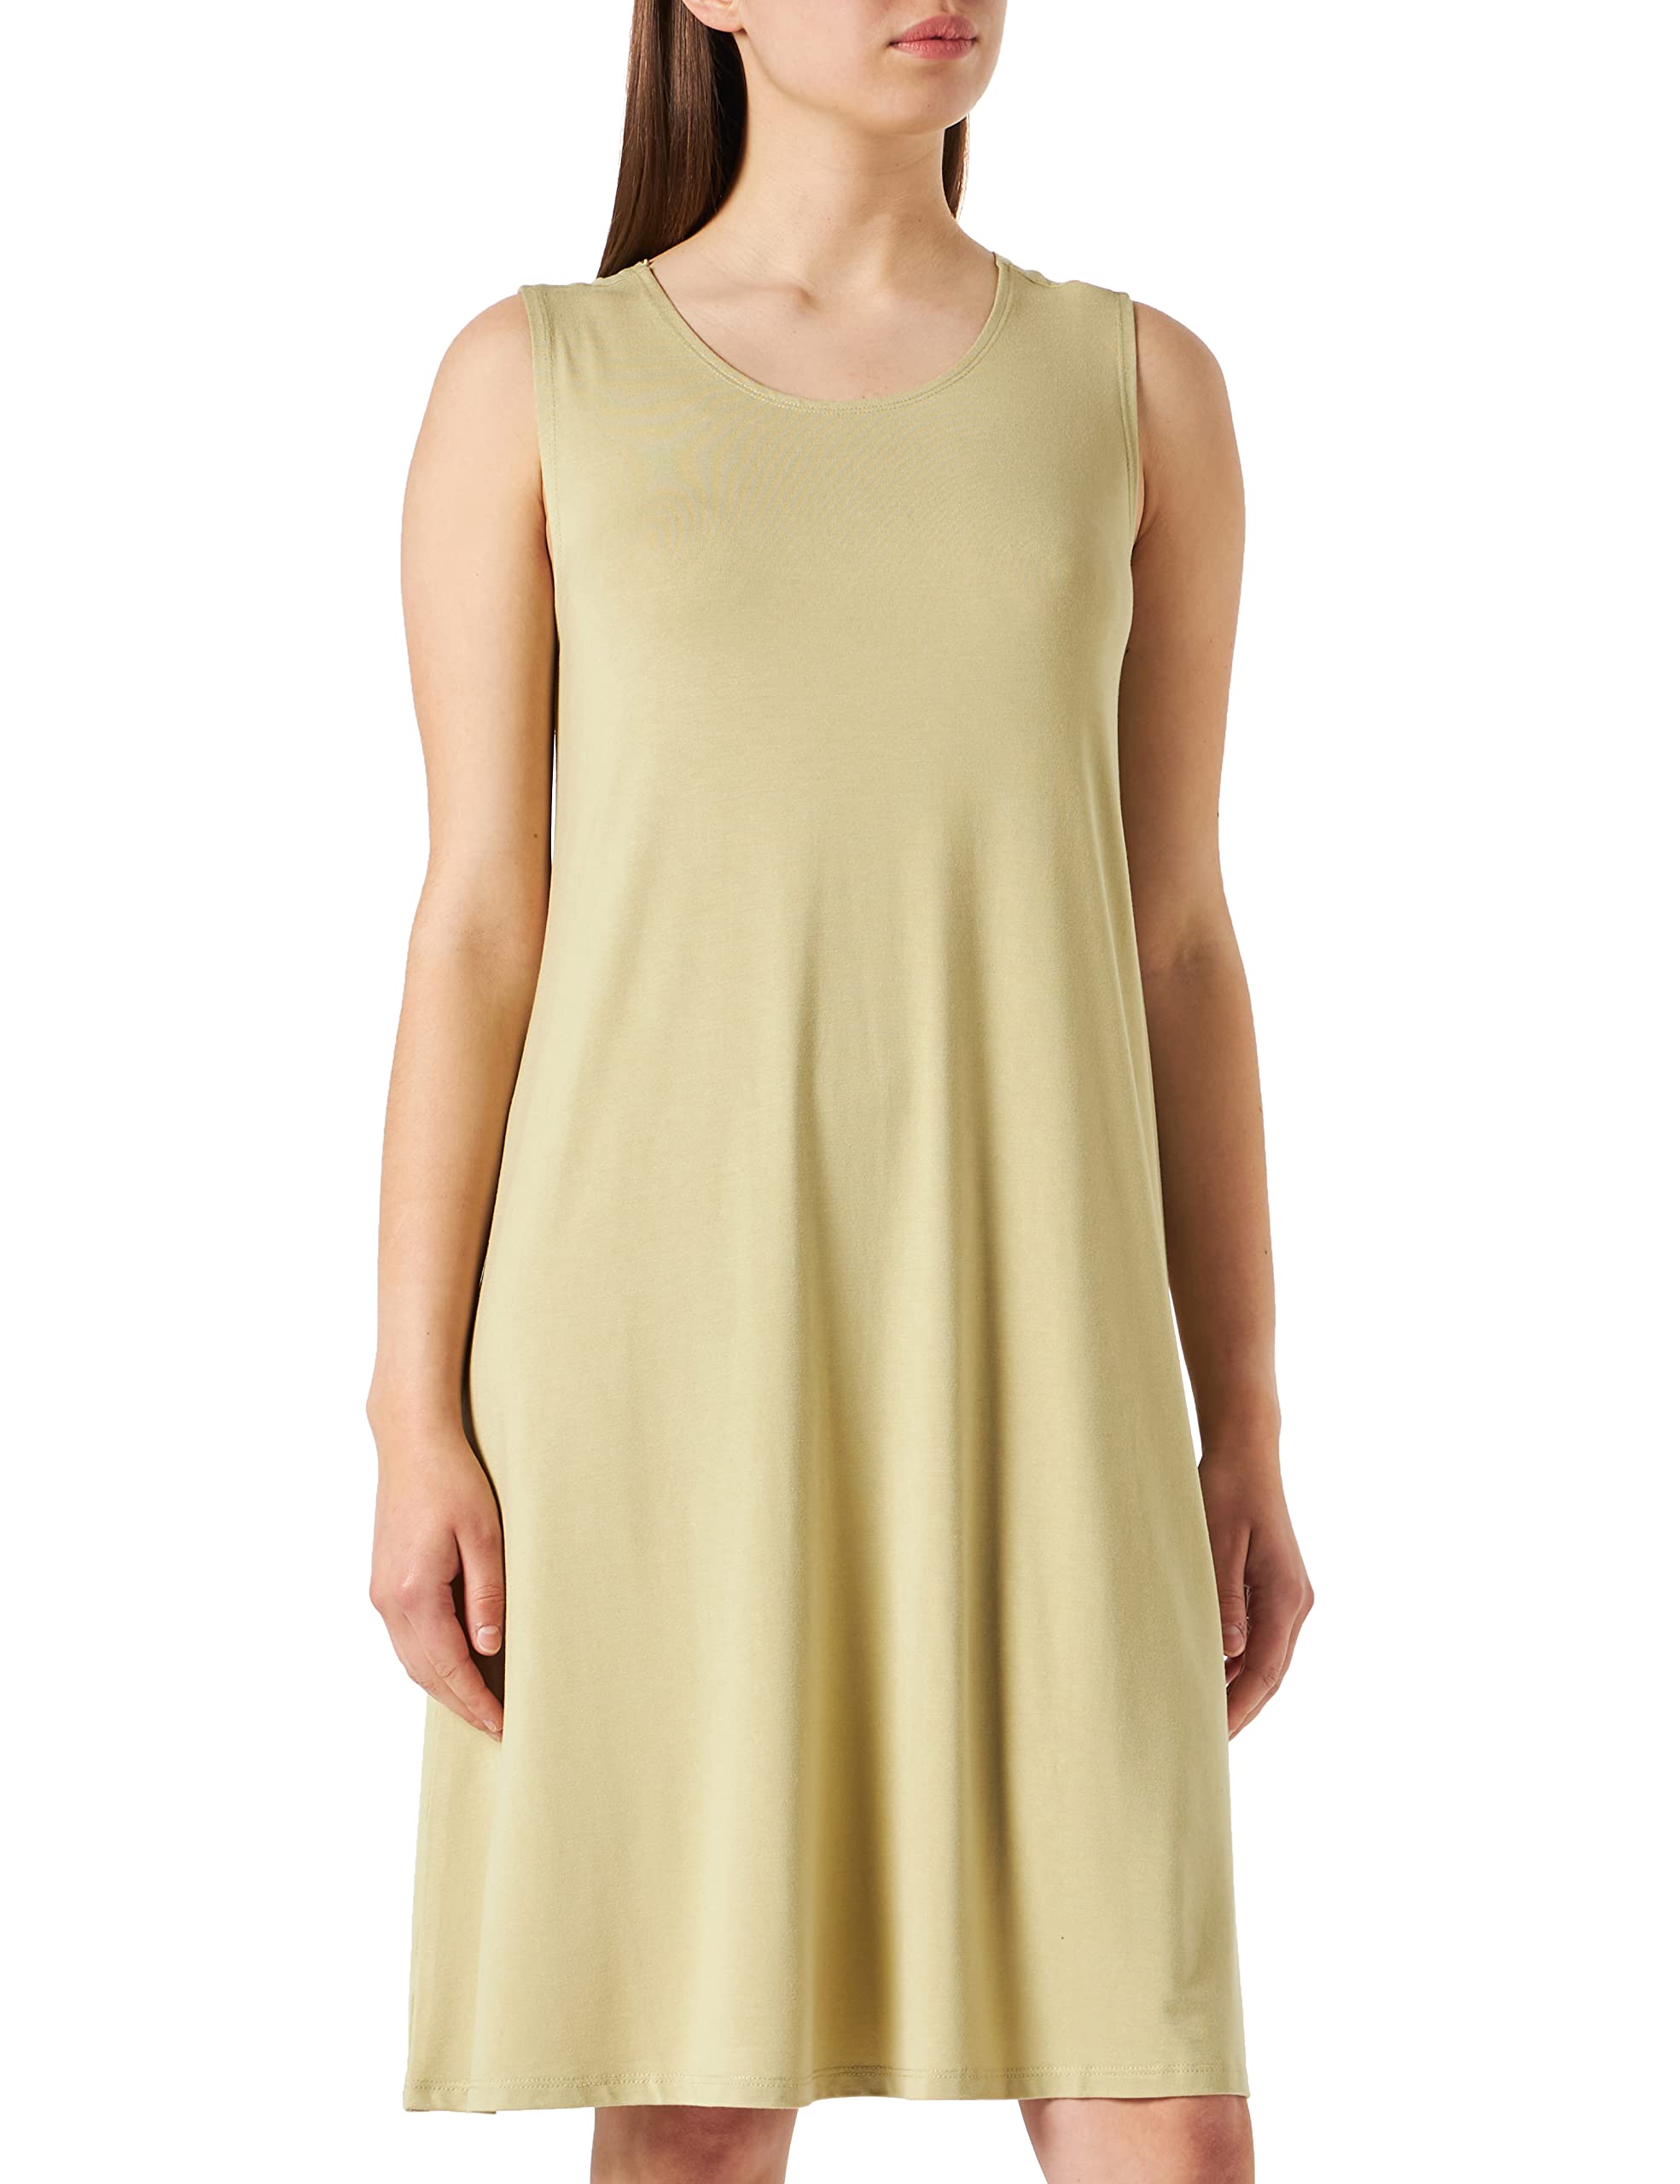 TOM TAILOR Damen Basic Kleid 1032209, 28725 - Light Moderate Olive, 40